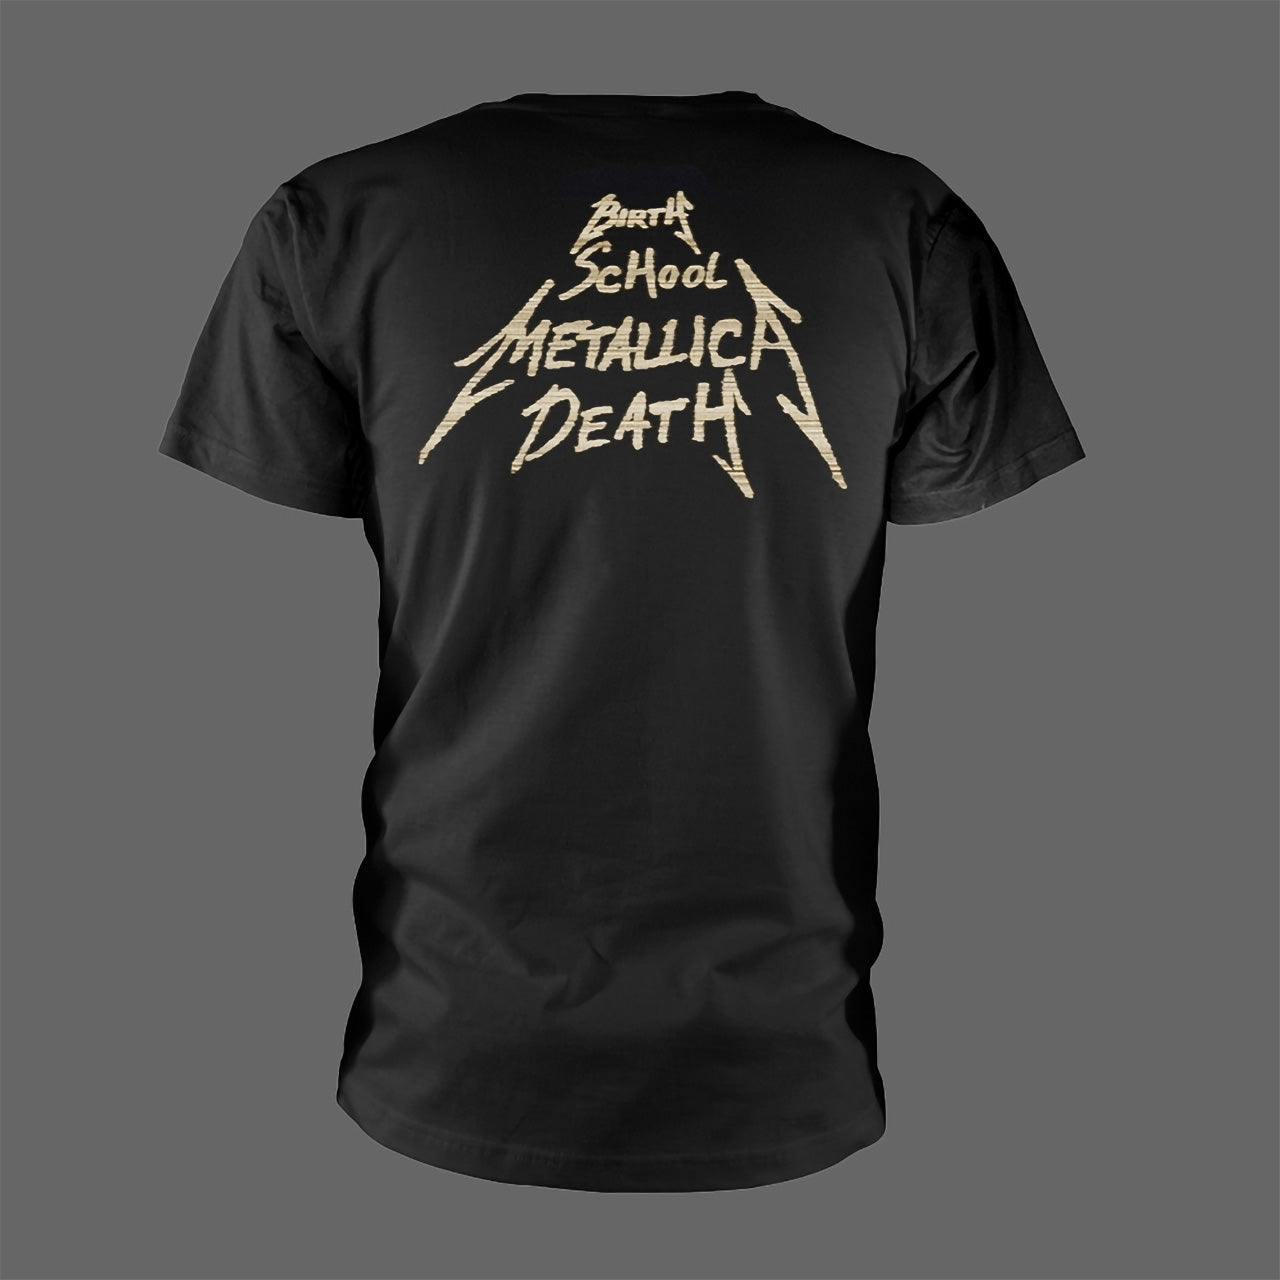 Metallica - Birth, School, Metallica, Death (T-Shirt)